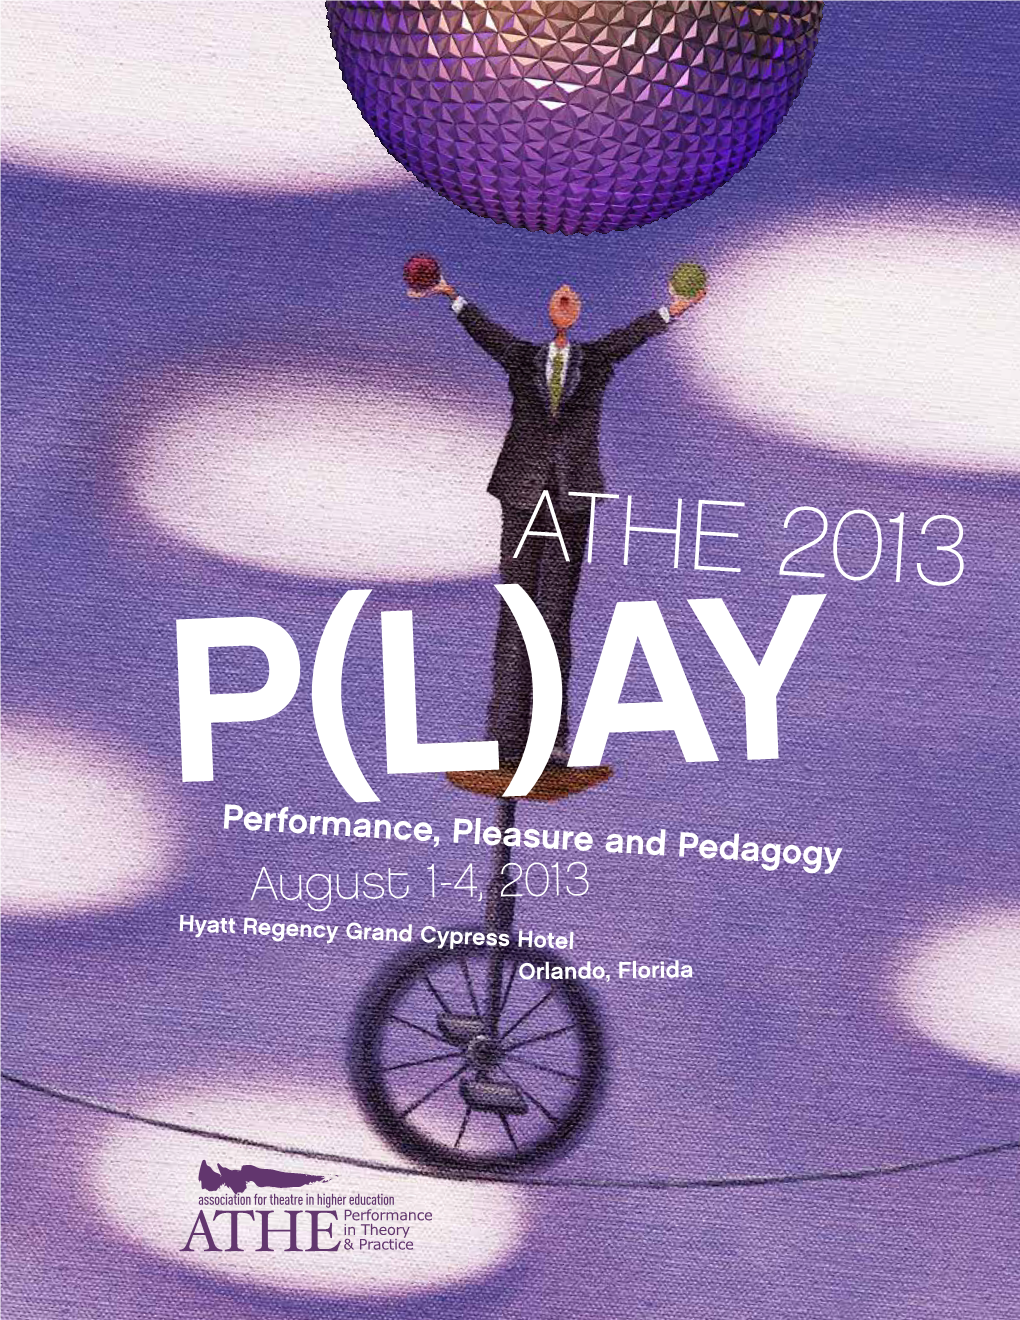 ATHE 2013 (L)AY Pperformance, Pleasure and Pedagogy August 1-4, 2013 Hyatt Regency Grand Cypress Hotel